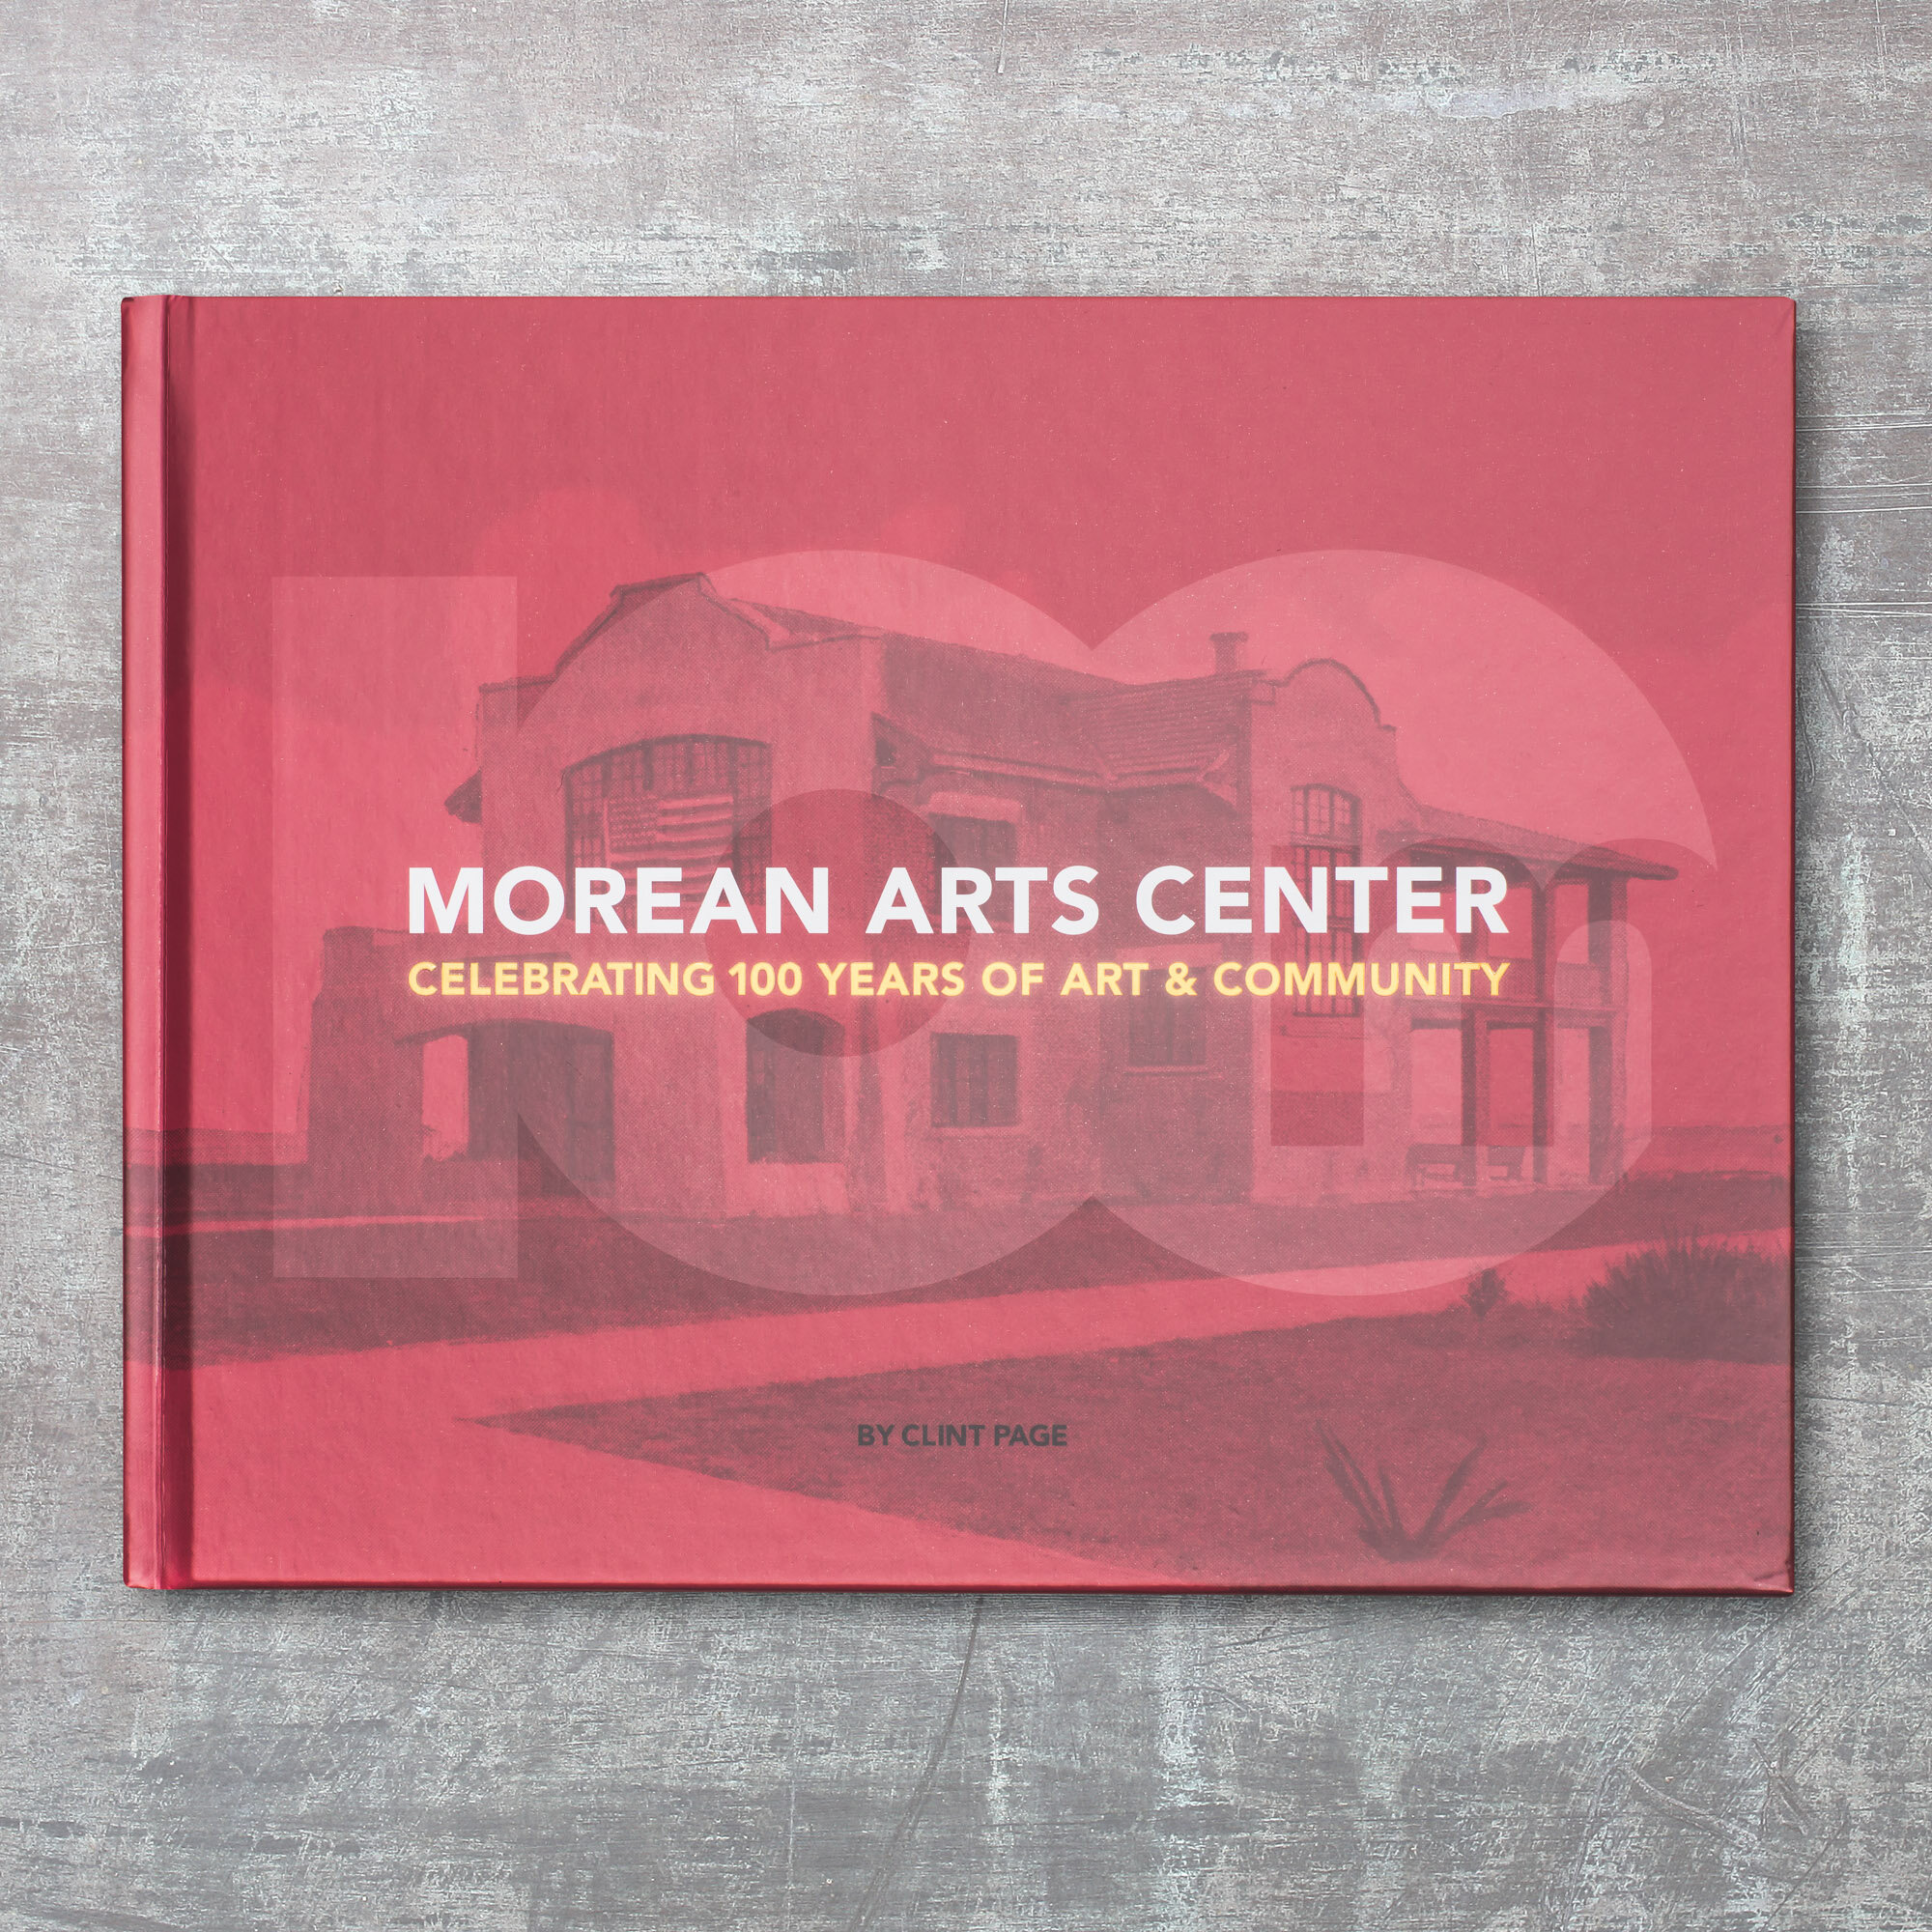 todd-bates-creative_Moreanl-arts-center_museum_book-design.jpg